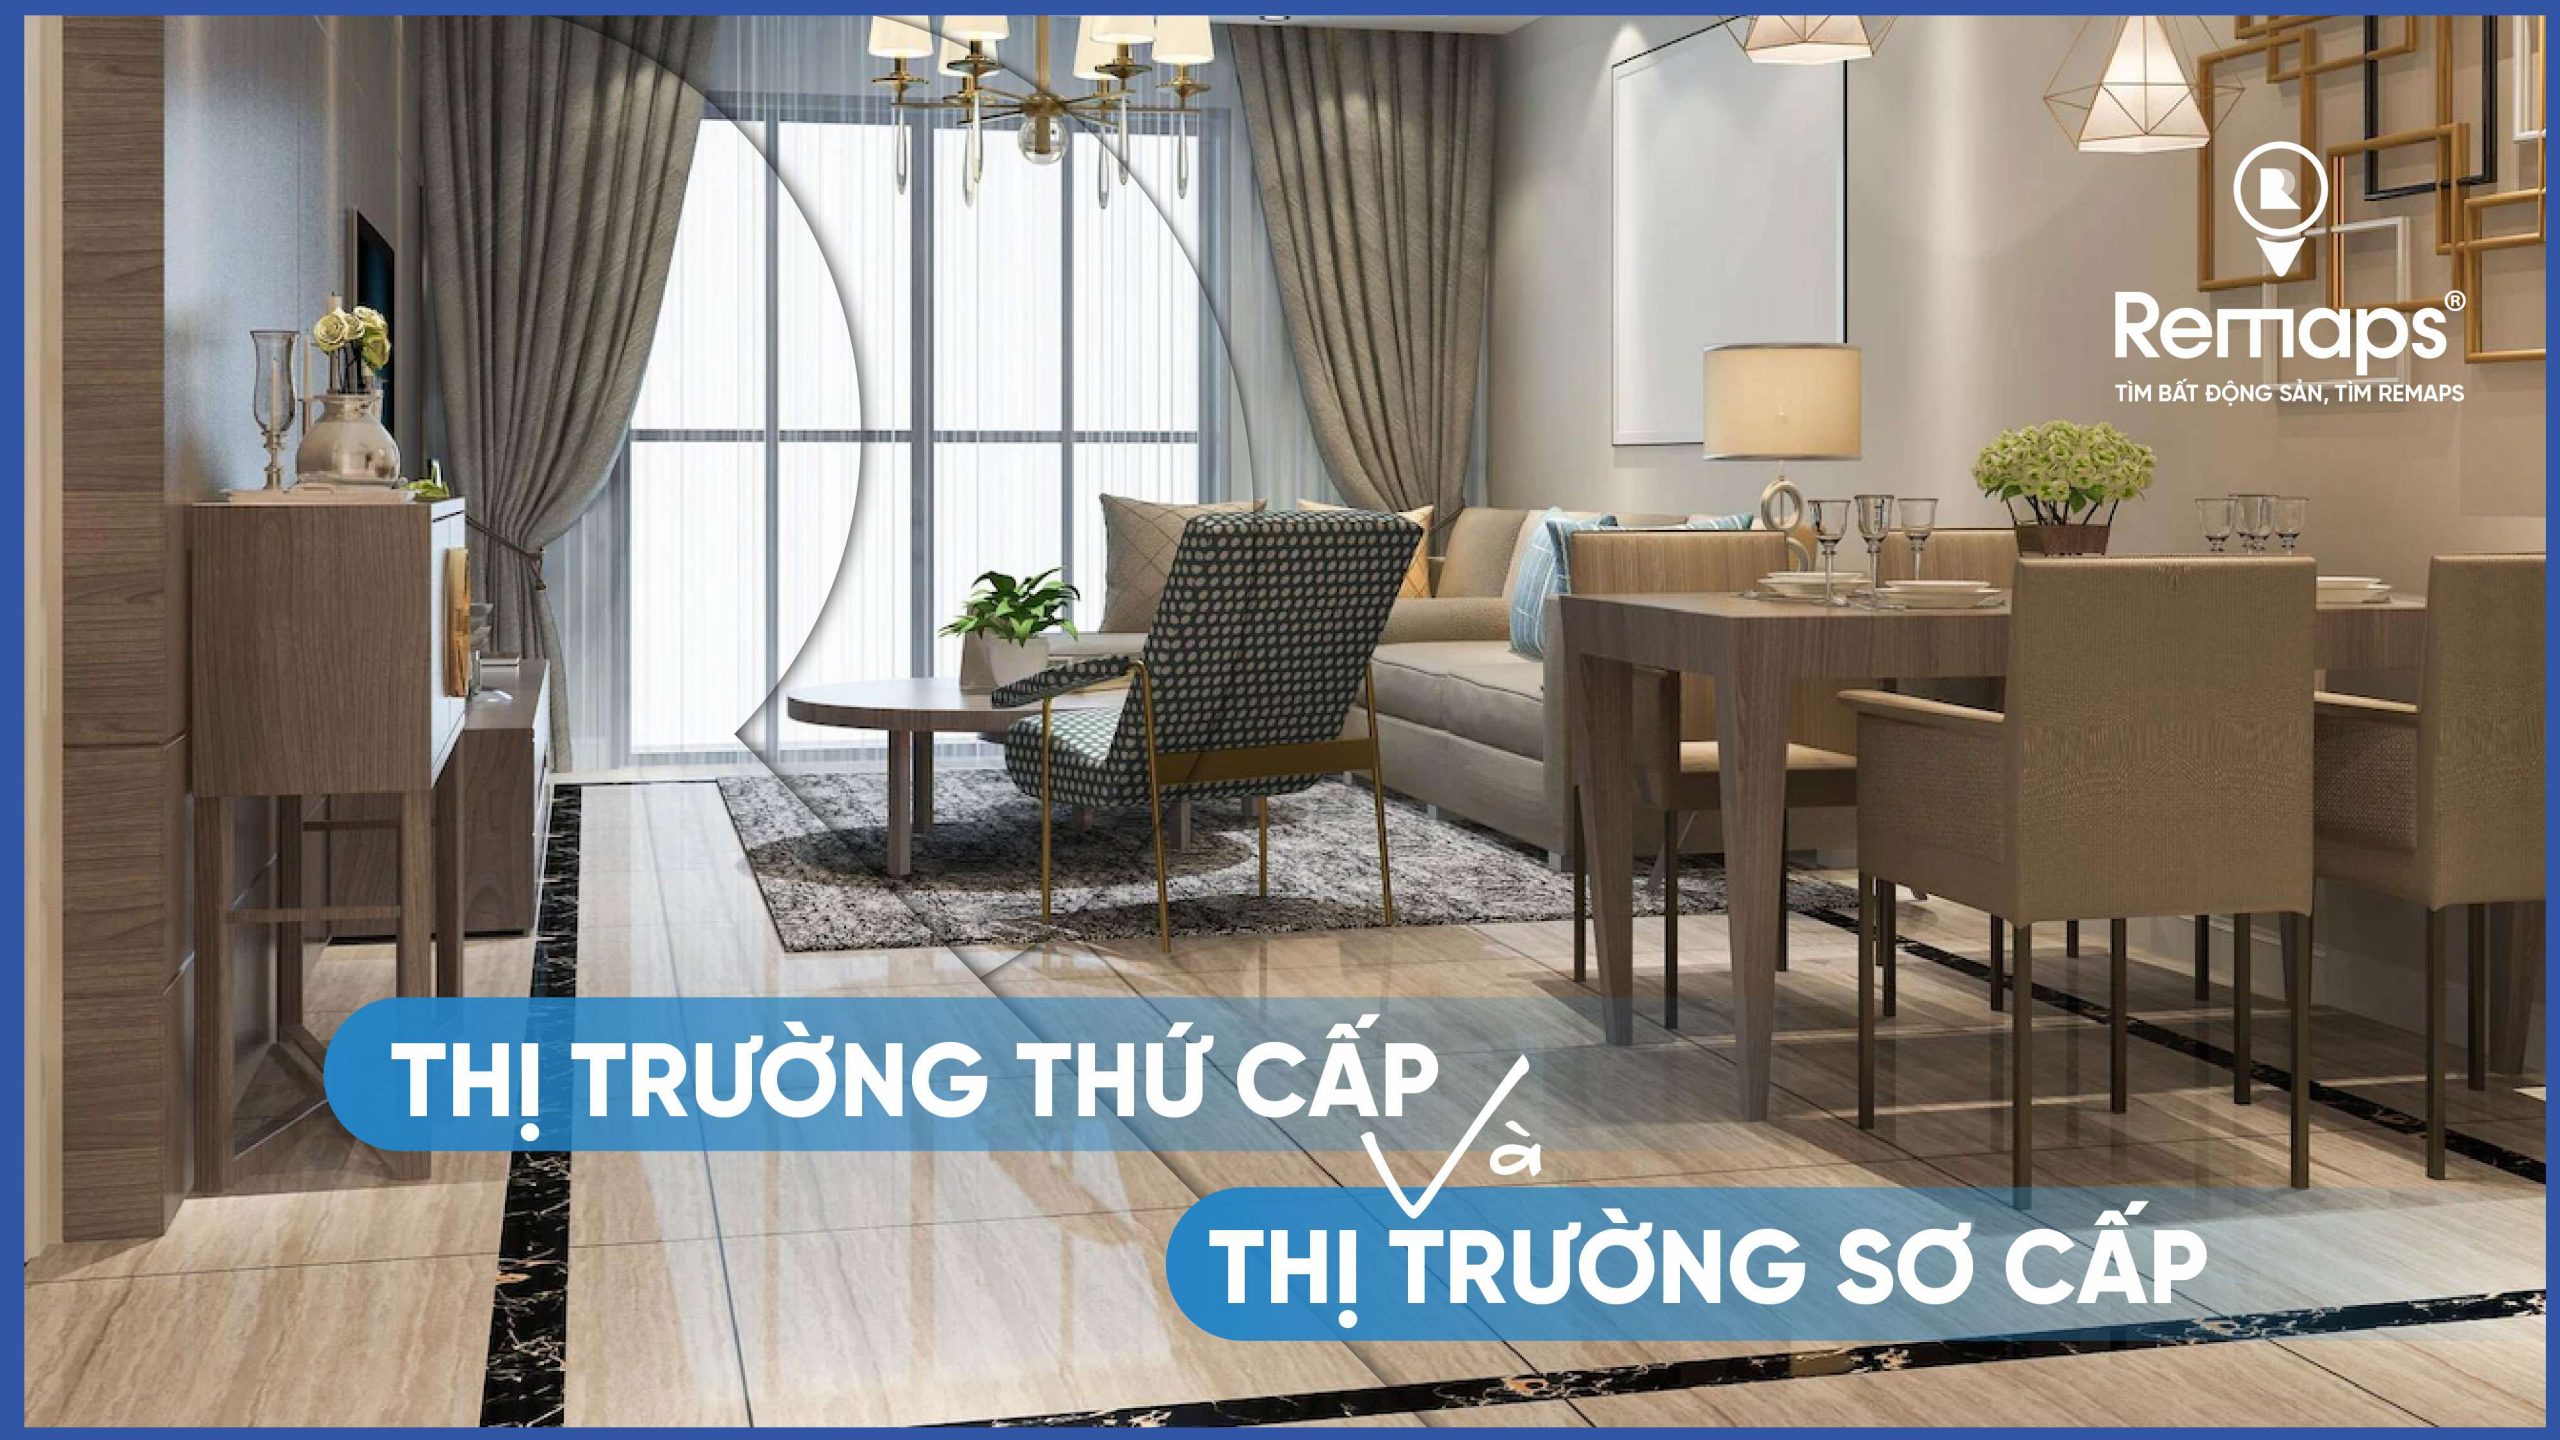 thi-truong-so-cap-va-thi-truong-thu-cap-news.remaps.vn